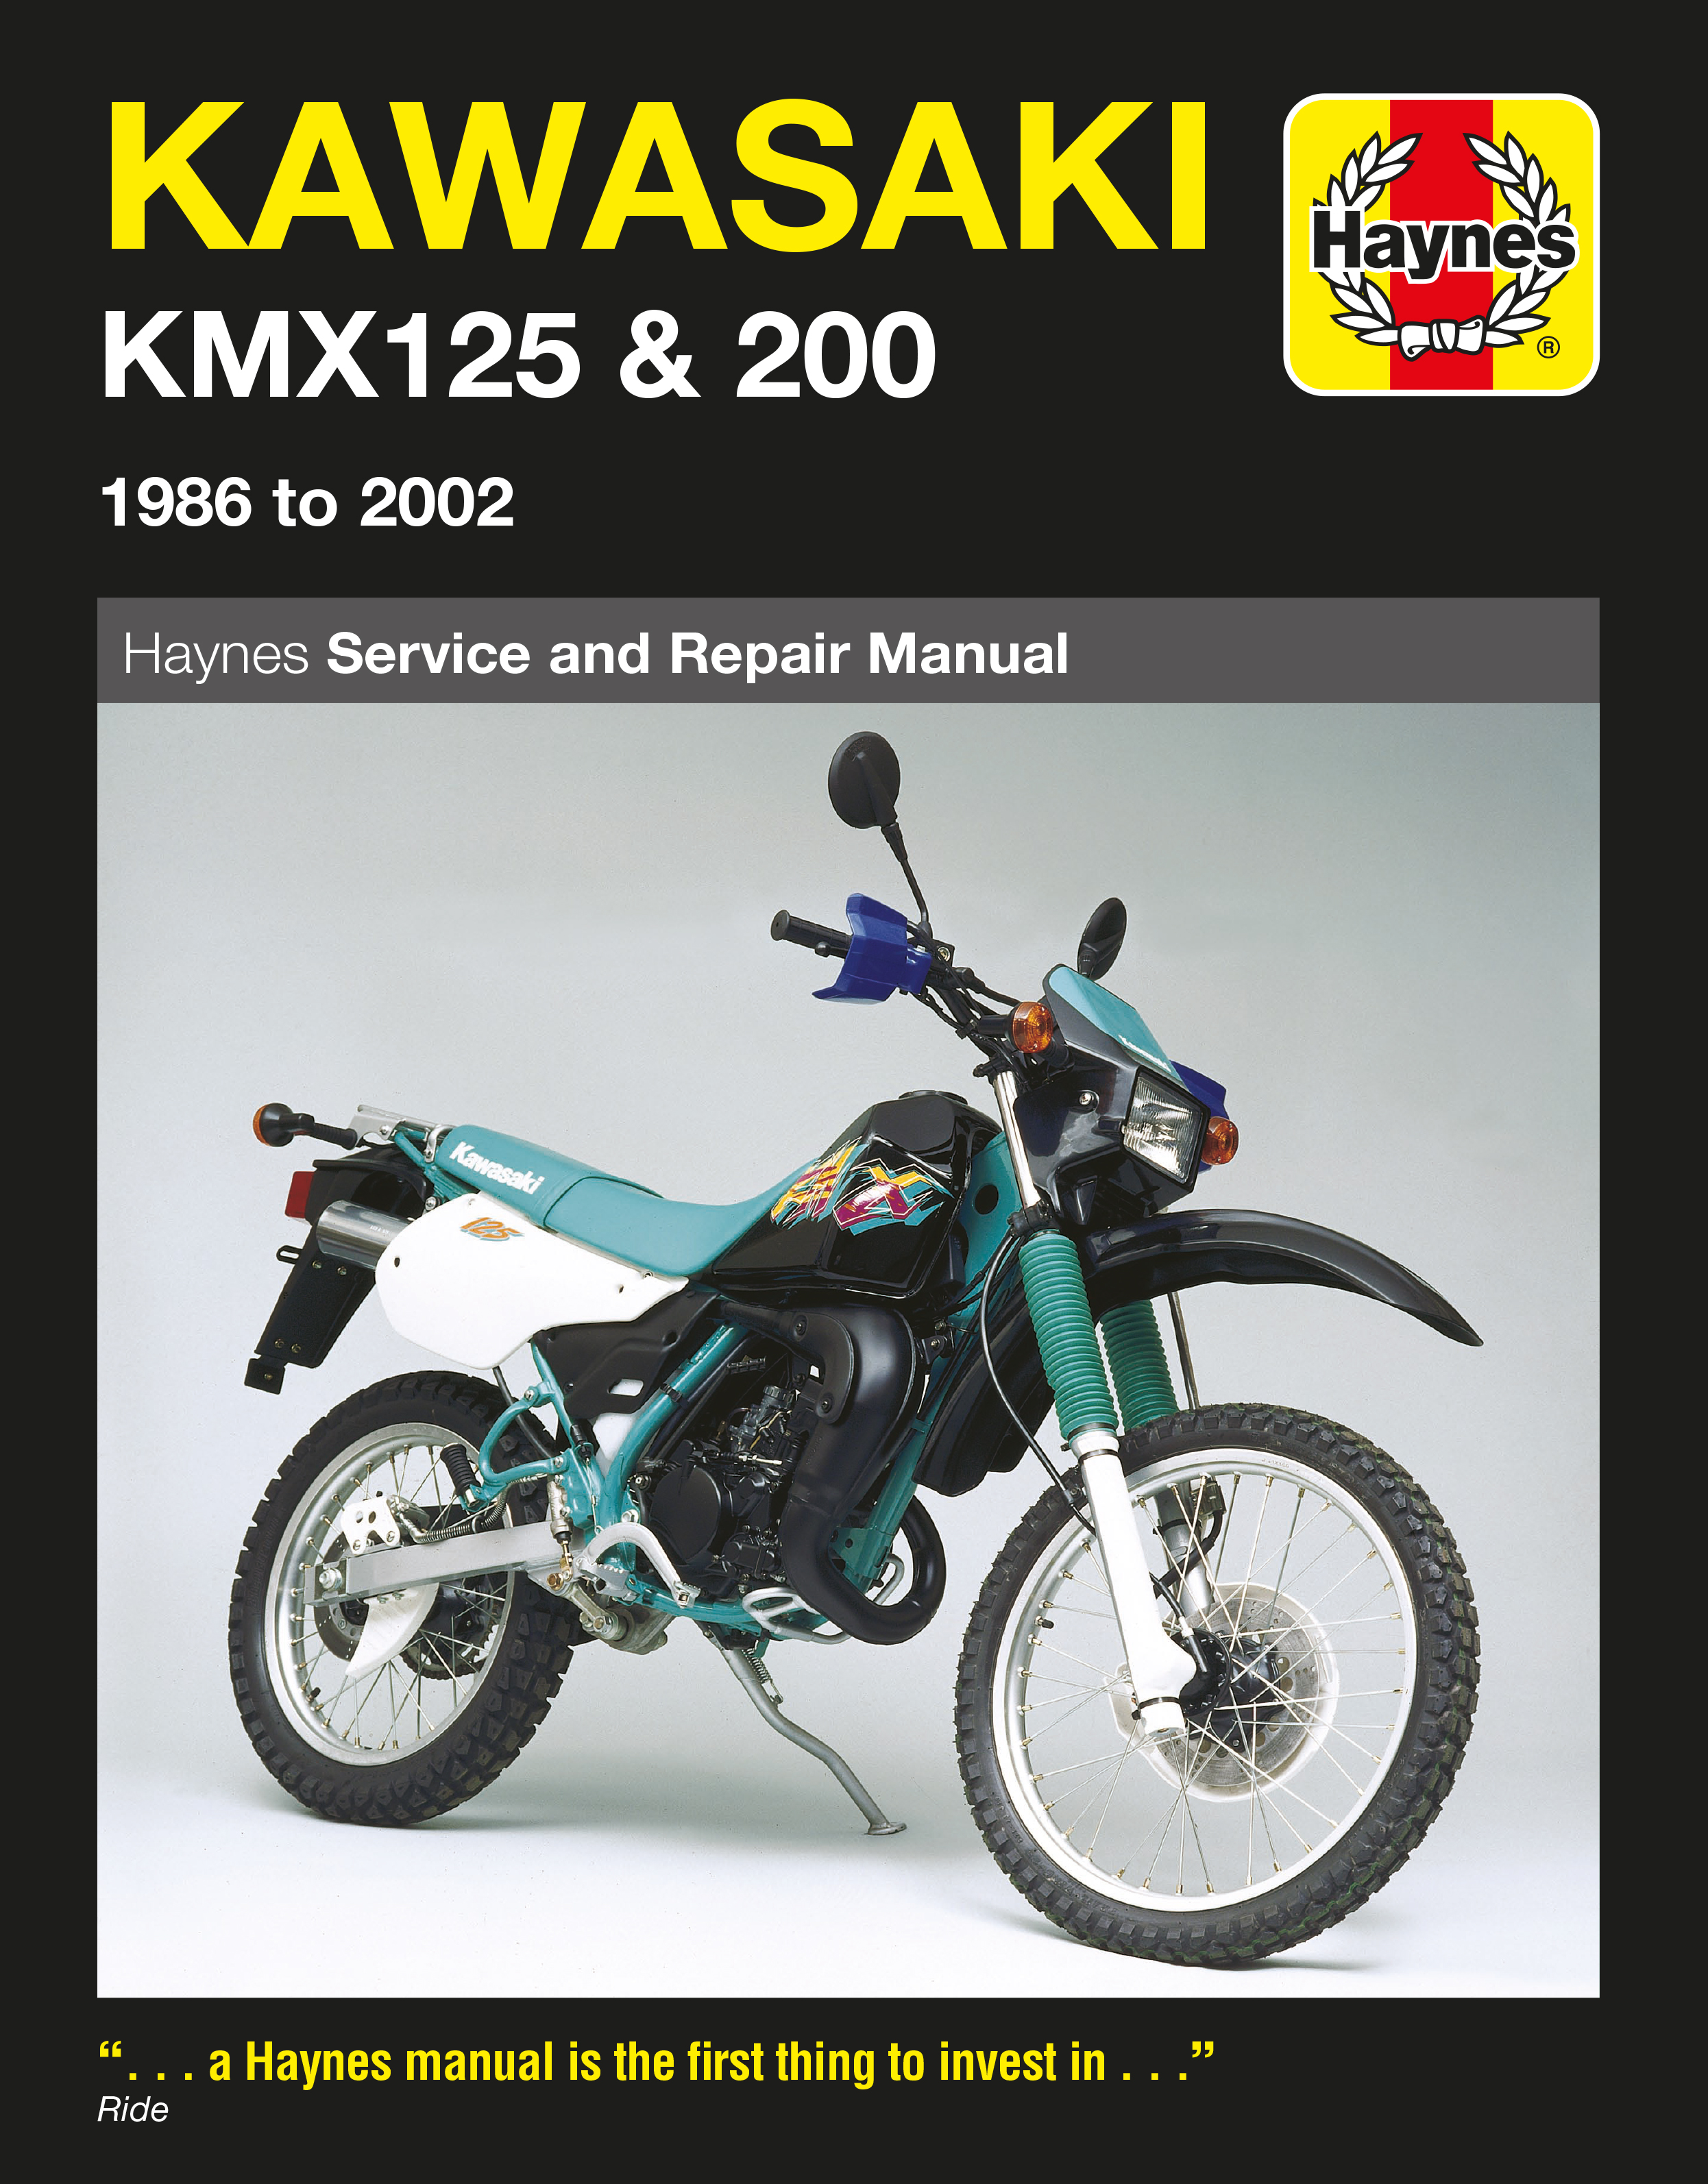 Kawasaki kmx 125 haynes manual download